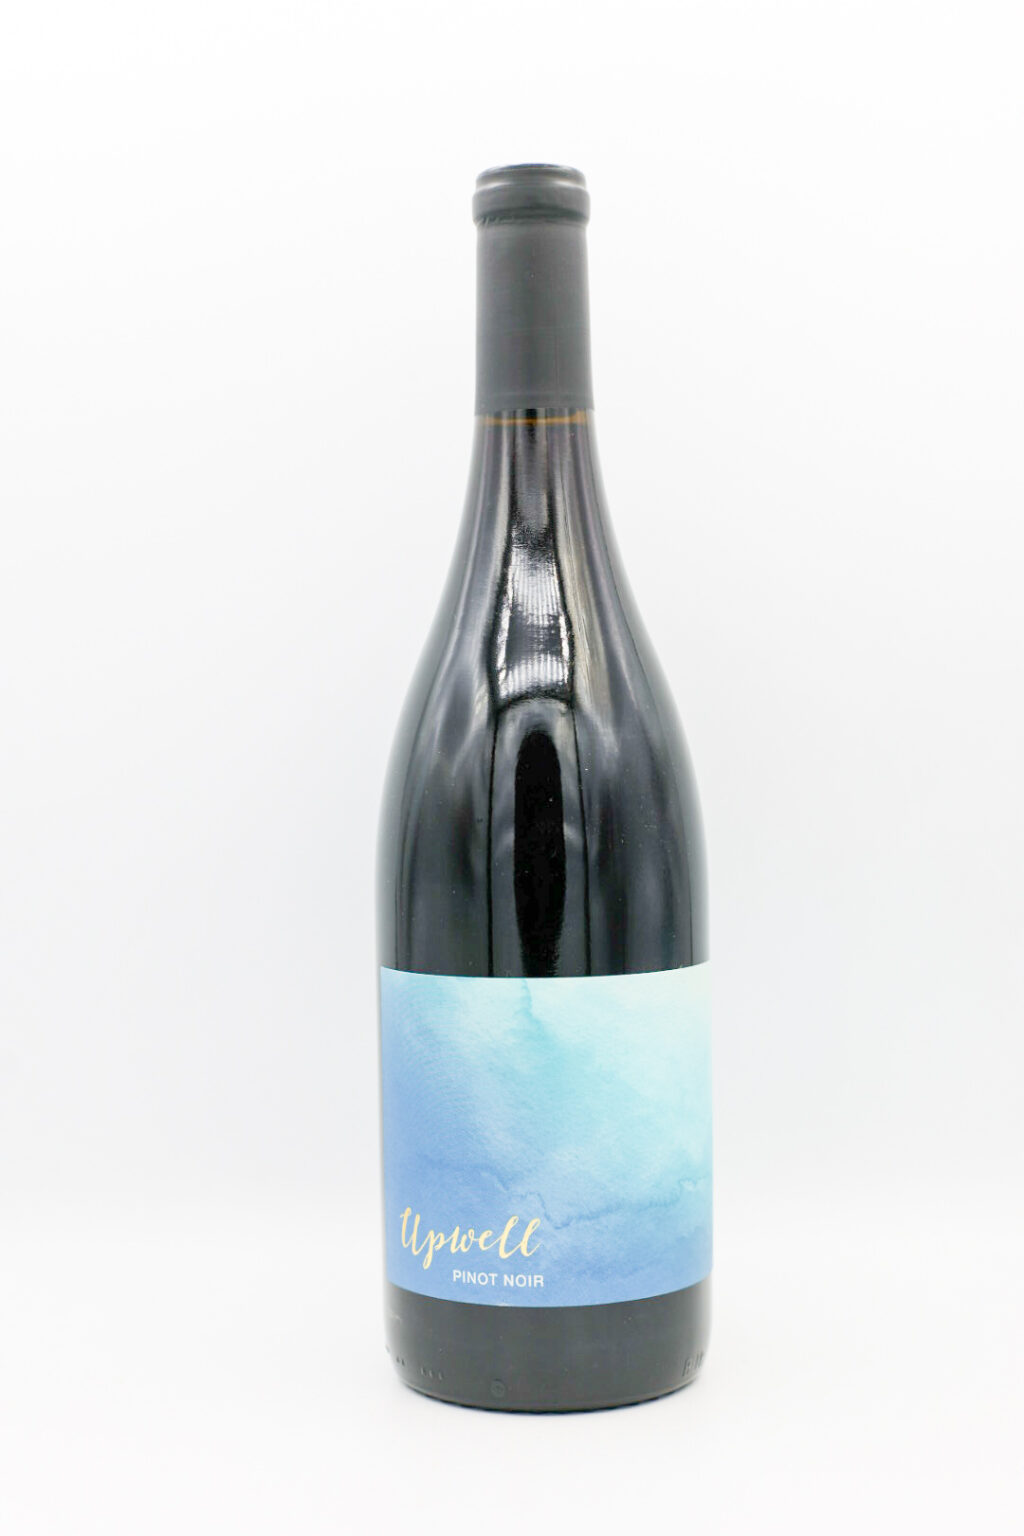 Upwell Pinot Noir  2020